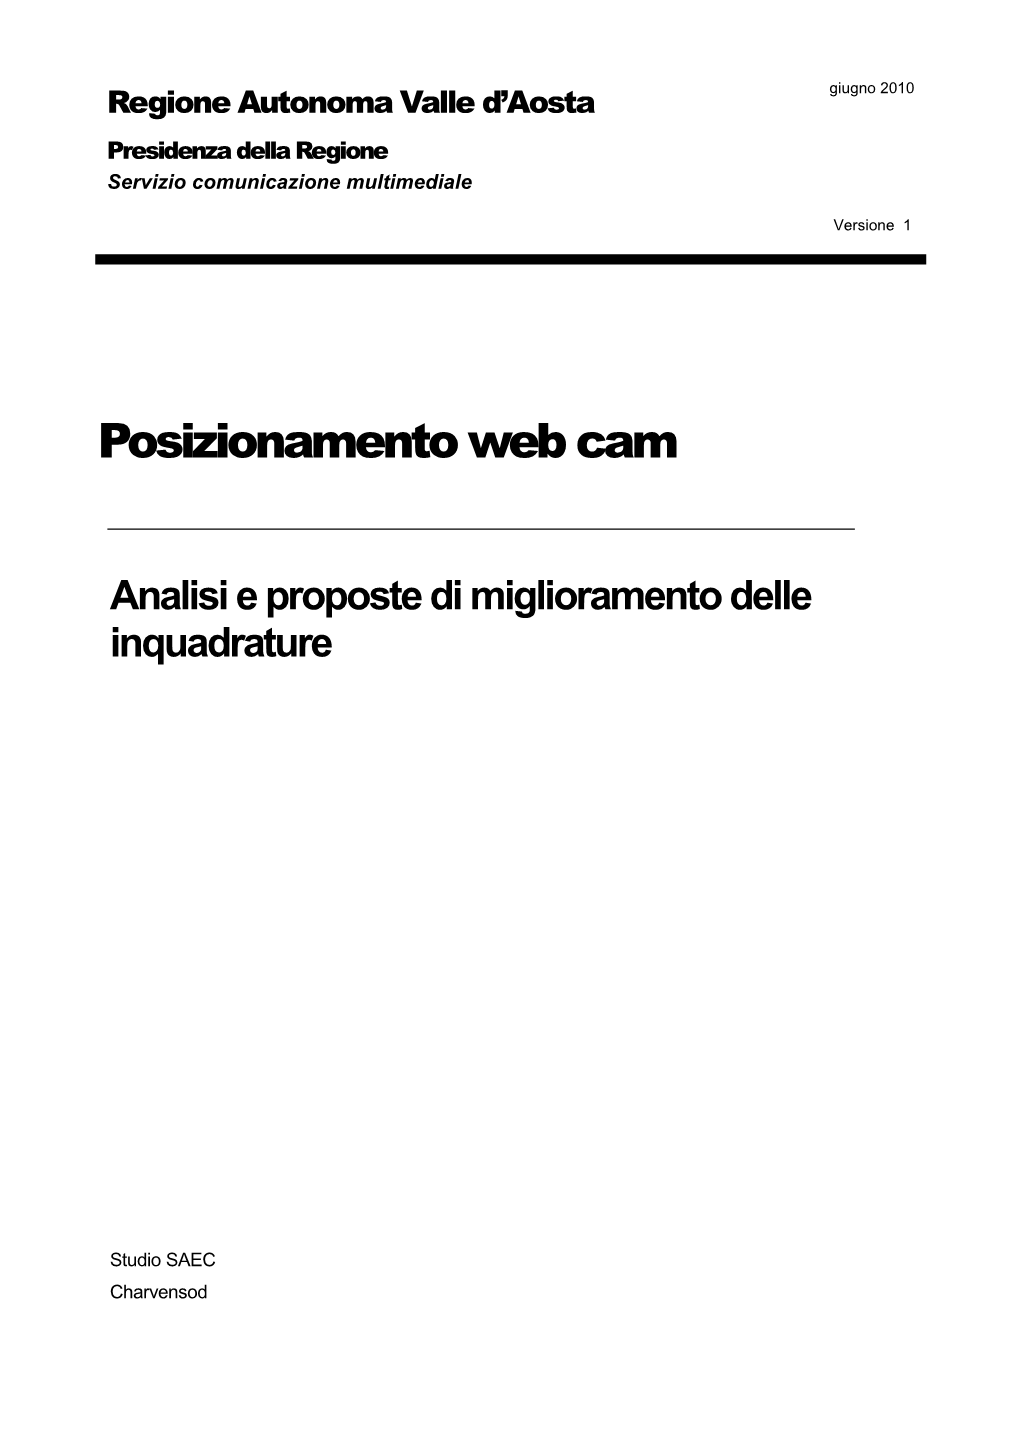 Posizionamento Web Cam